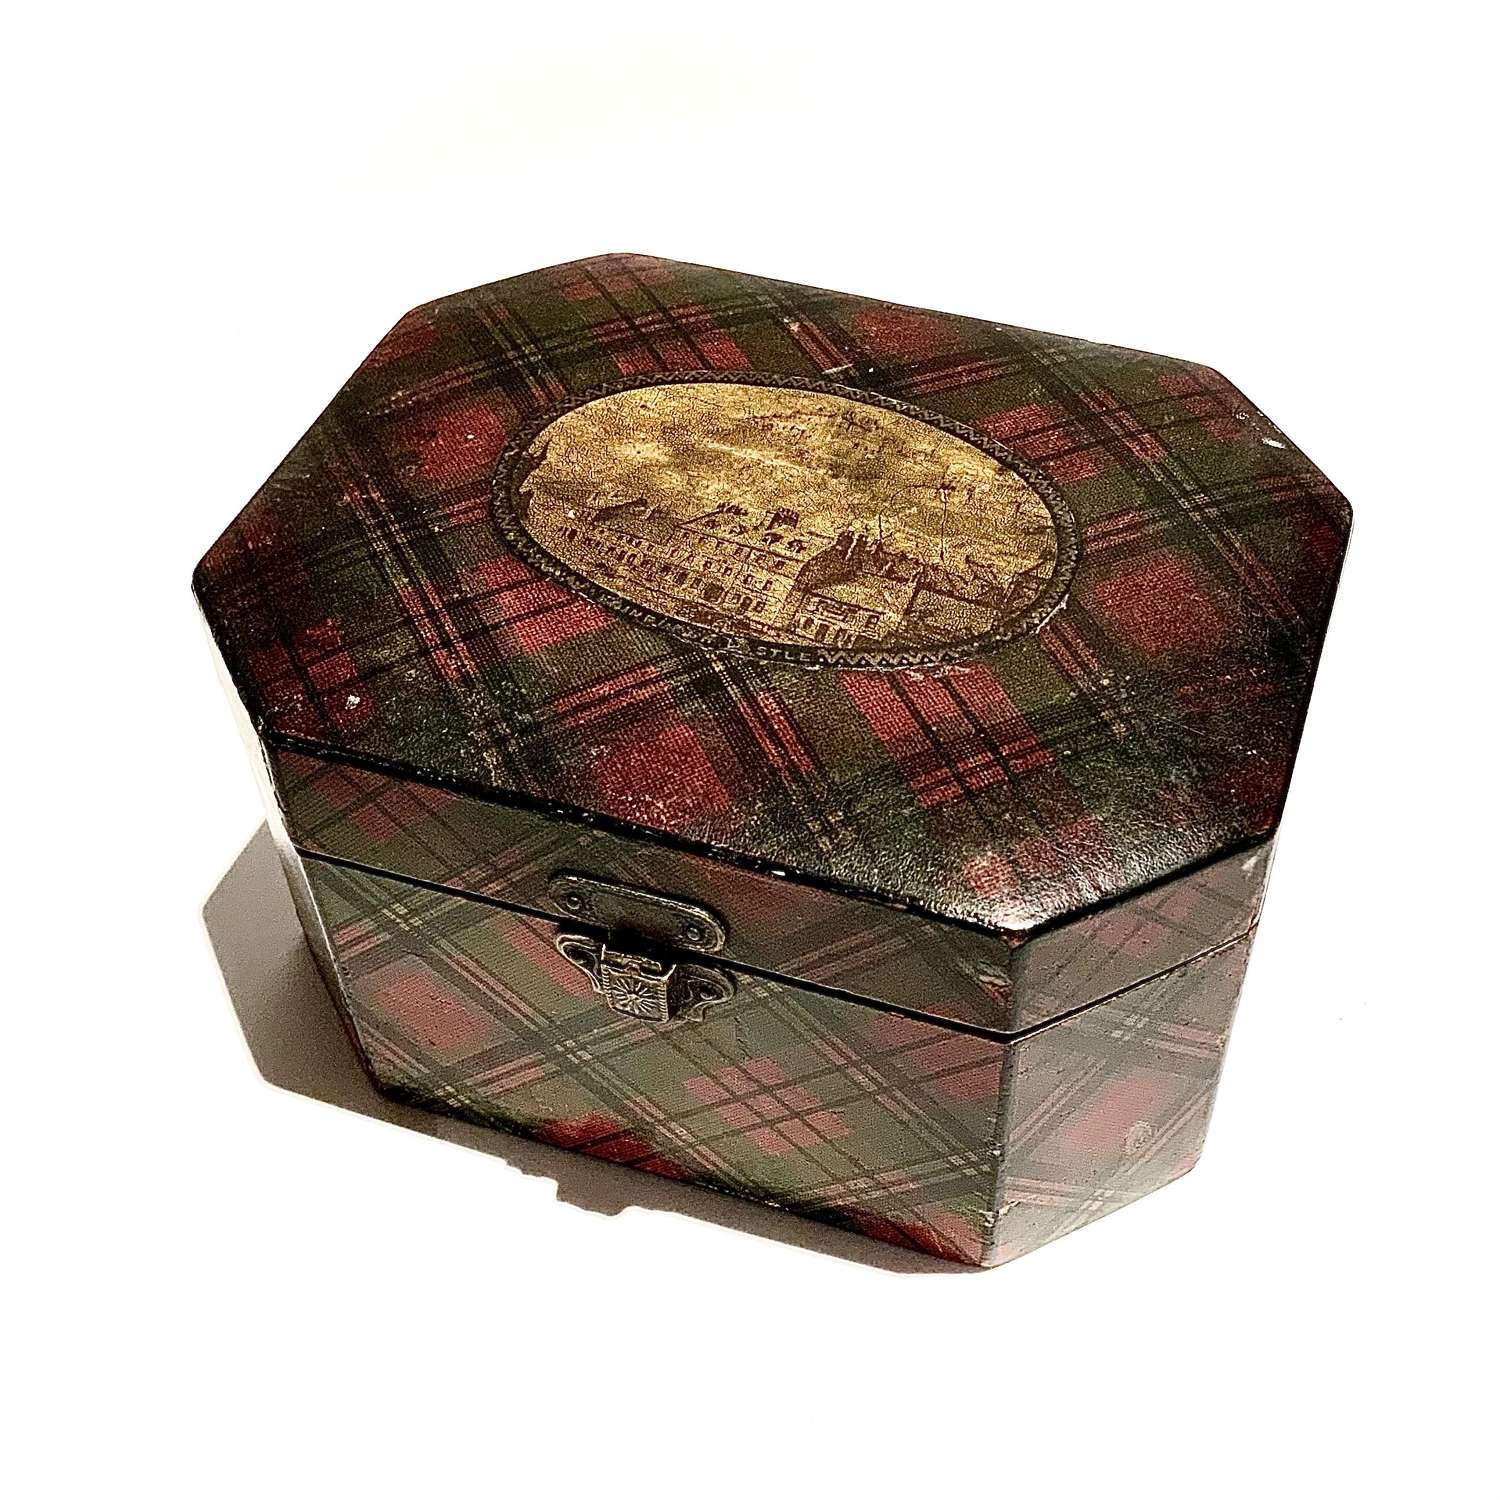 Mauchline ‘Tartan Ware’ ‘Prince Charlie’ pattern Octagonal Trinket Box